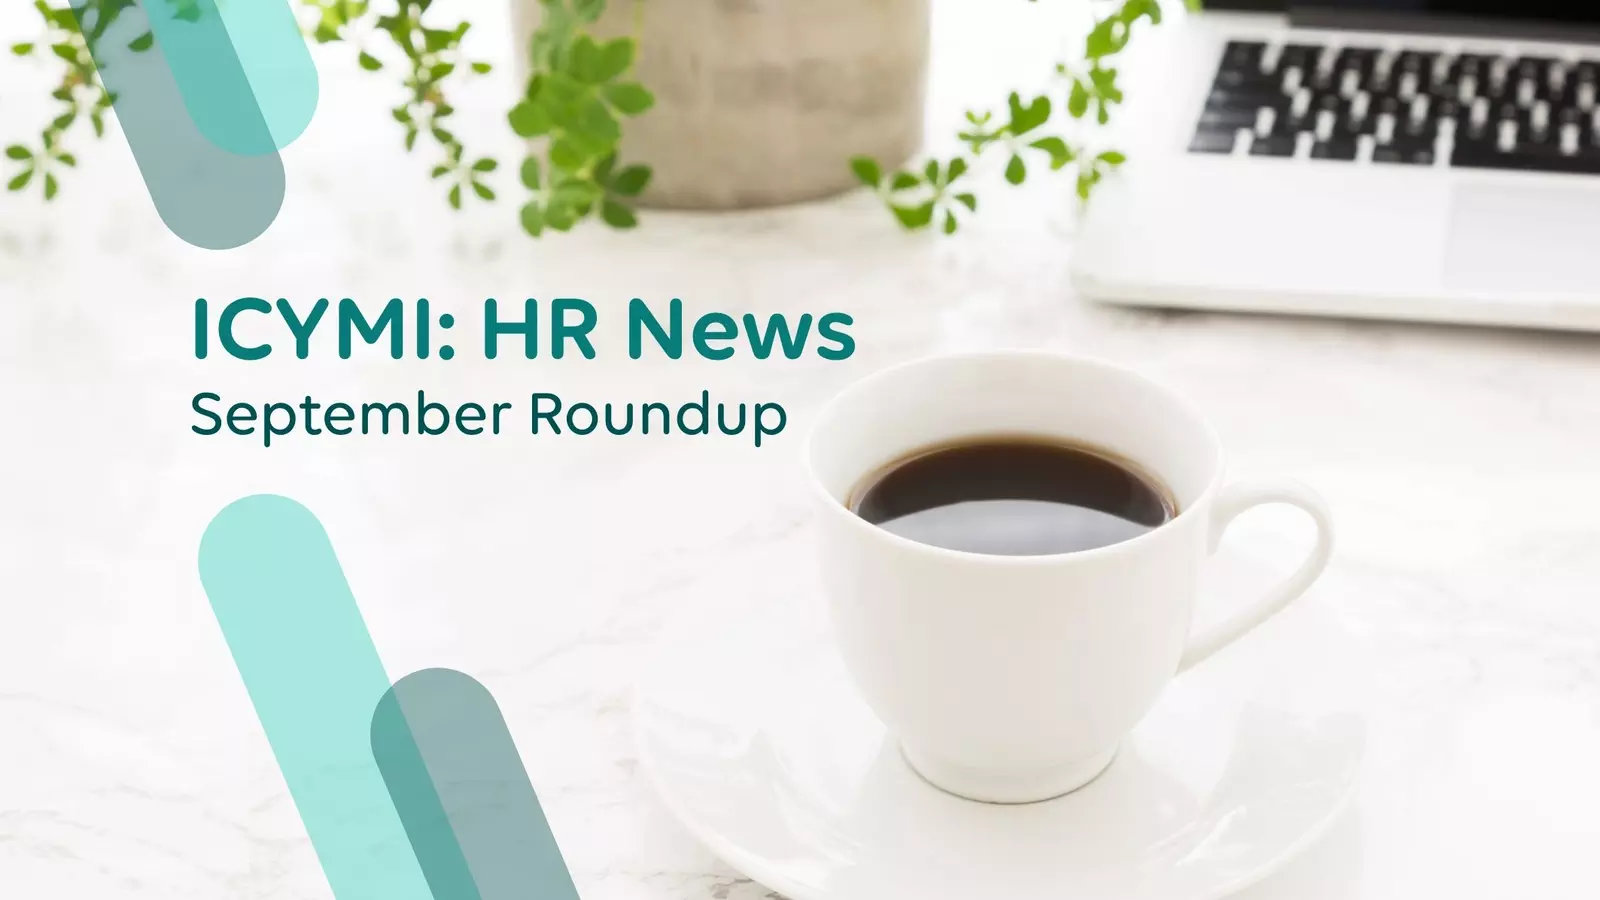 ICYMI: HR News - September Roundup 